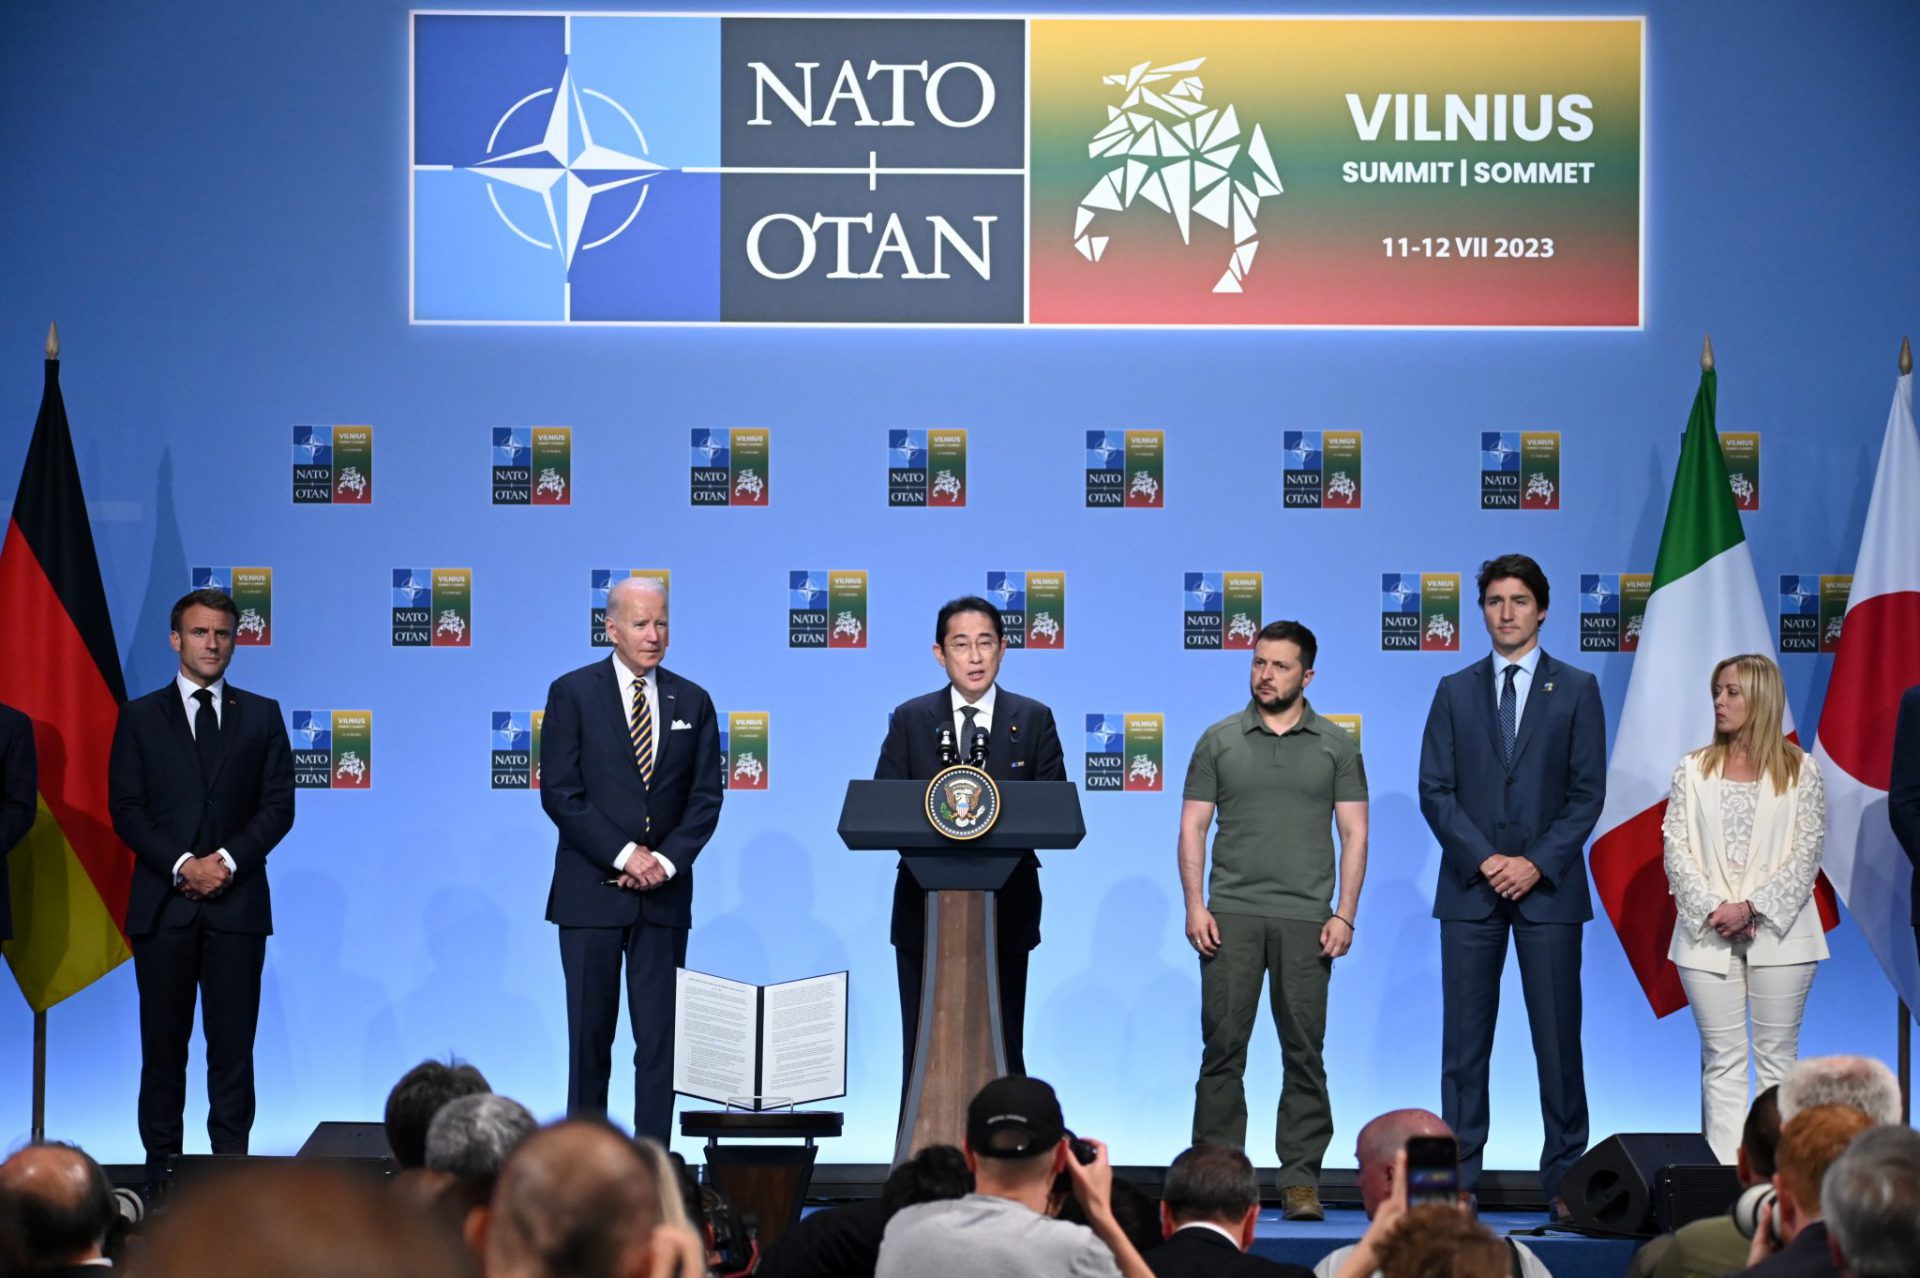 93% Oppose U.S. Plans of Creating ‘Asian NATO’